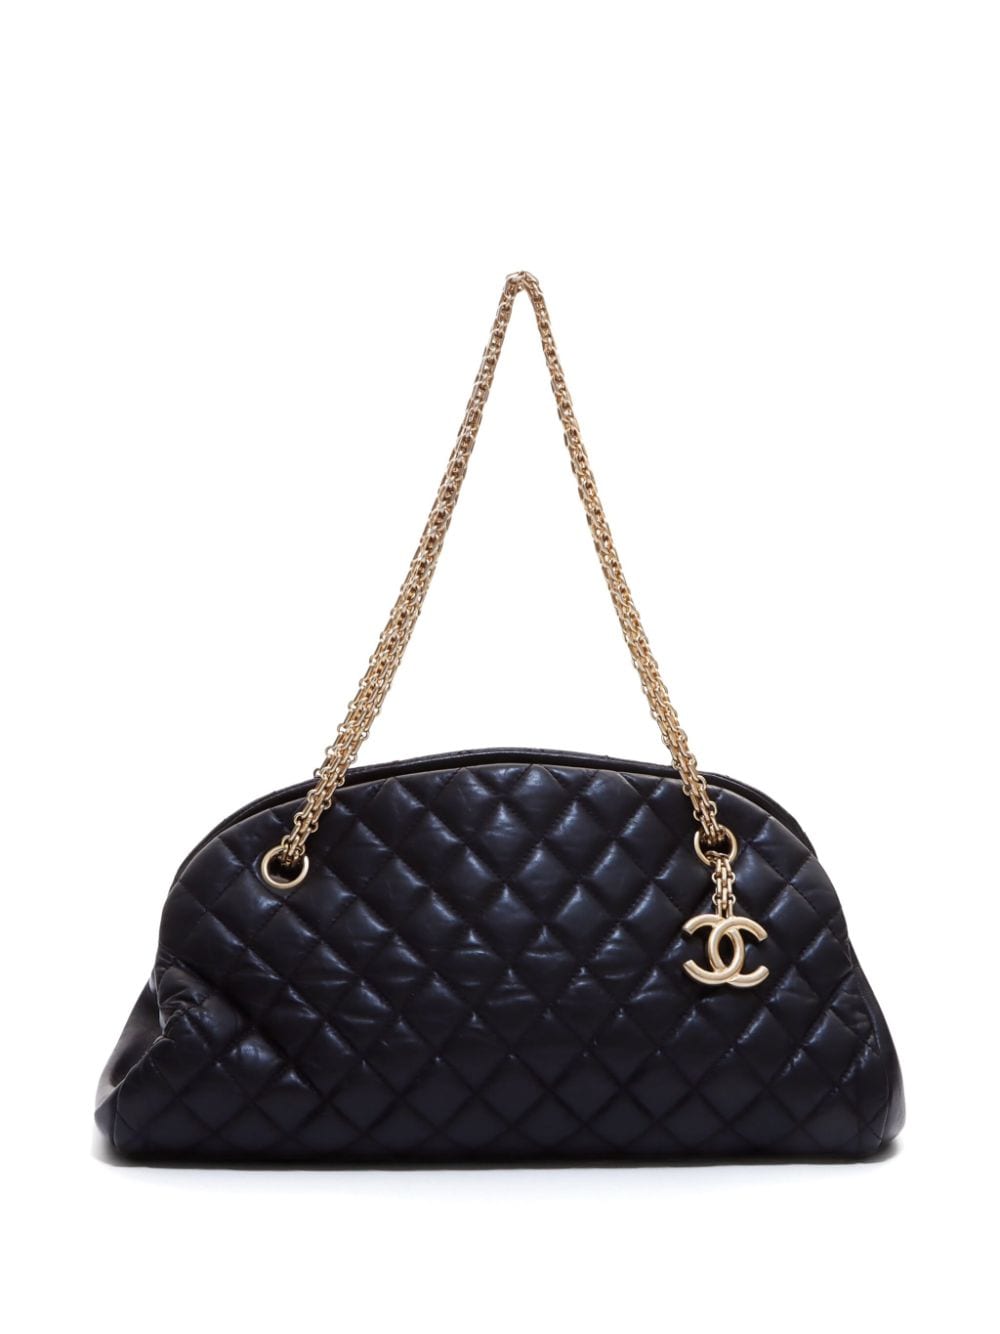 2011 logo charm diamond-quilted chain handbag